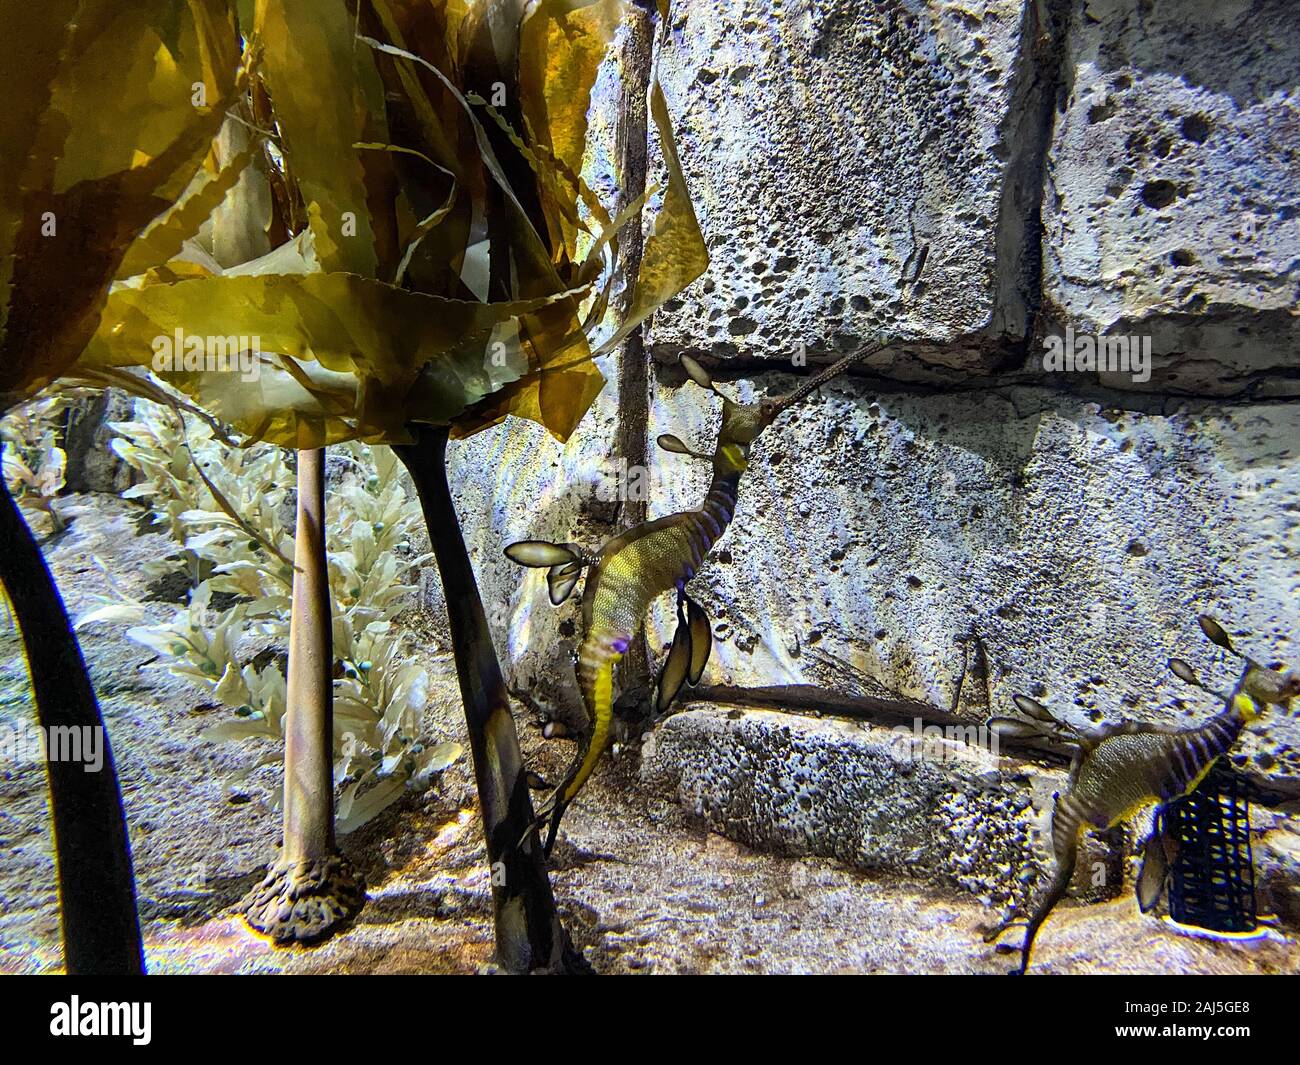 Orlando,FL/USA-12/25/19: An aquarium of swimming Leafy Sea Dragons at Seaworld Orlando Florida. Stock Photo